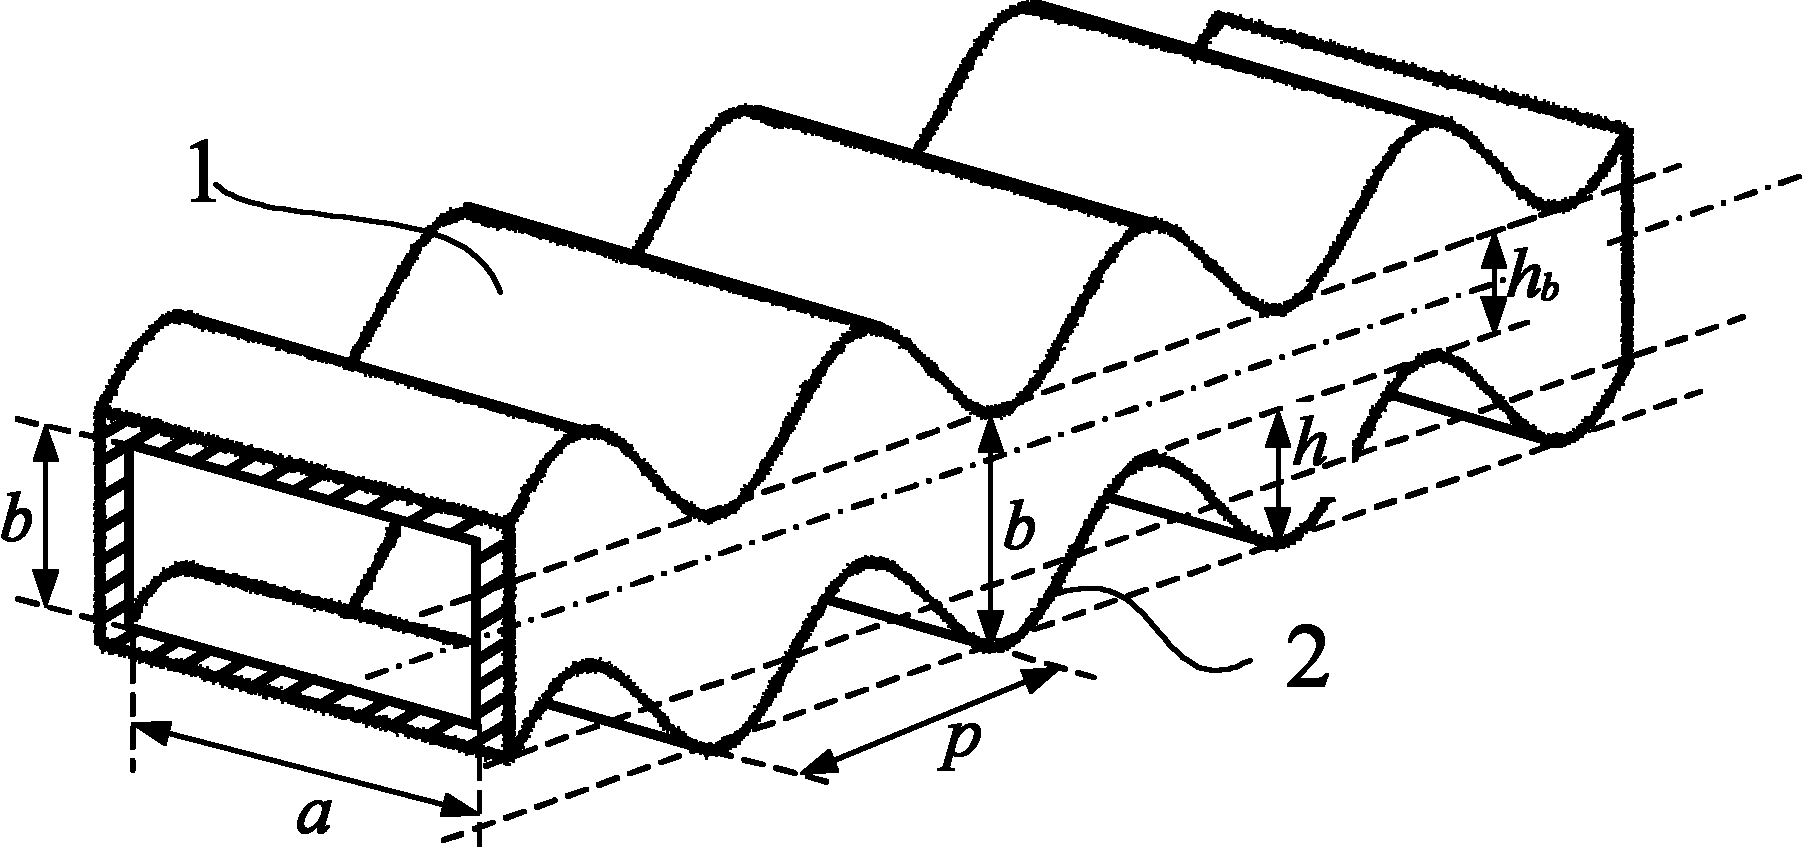 Fluctuant waveguide slow wave structure